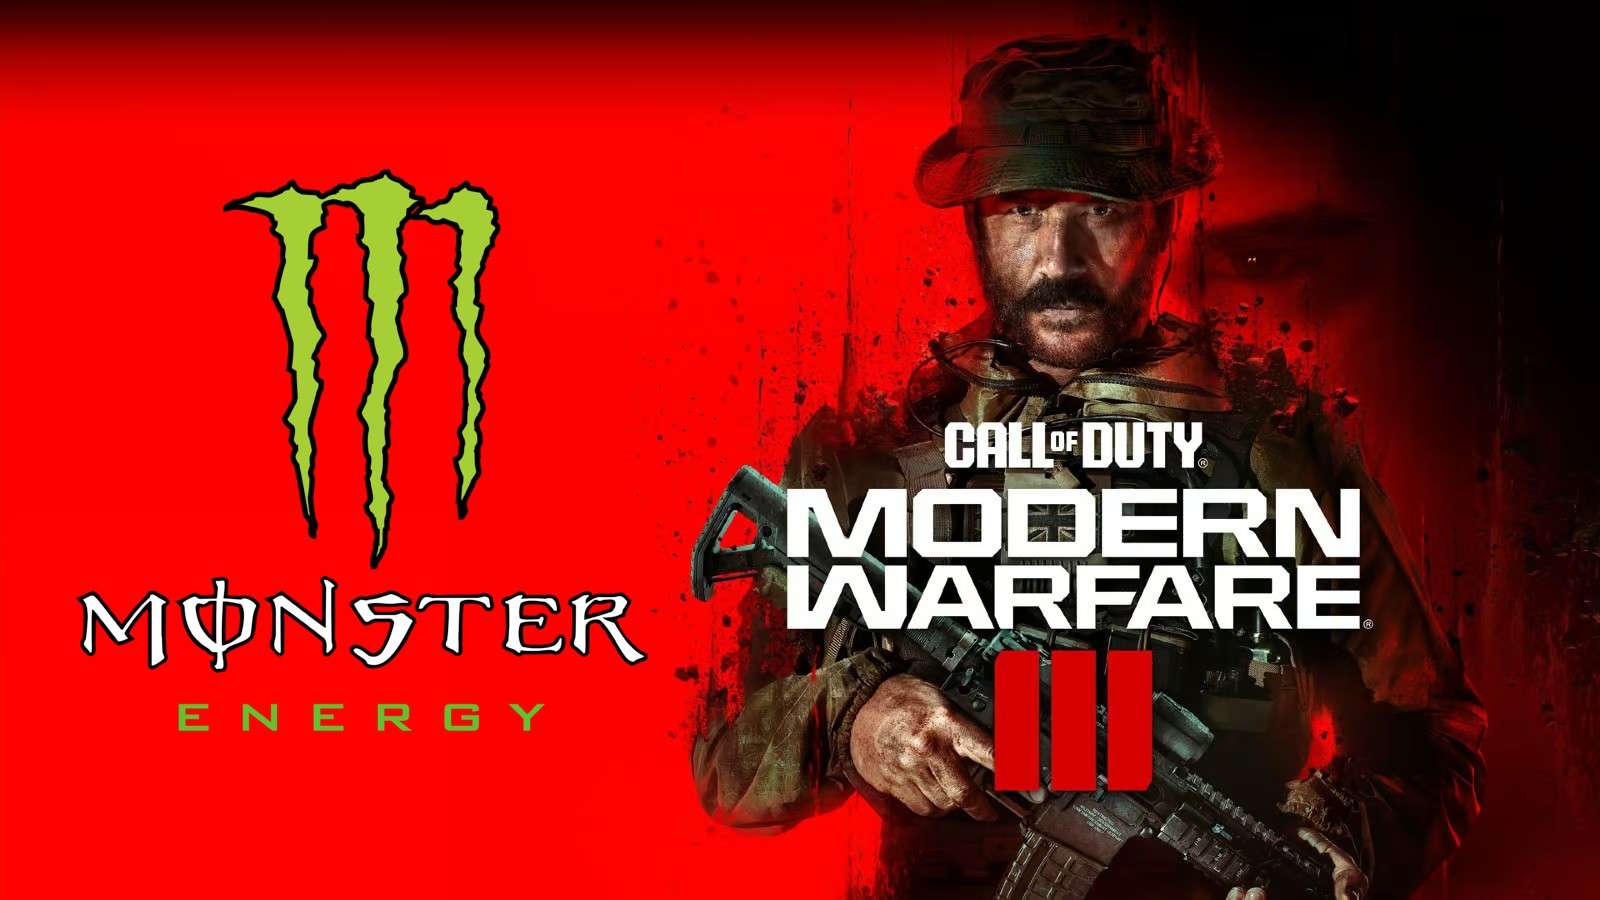 Monster and Modern Warfare 3